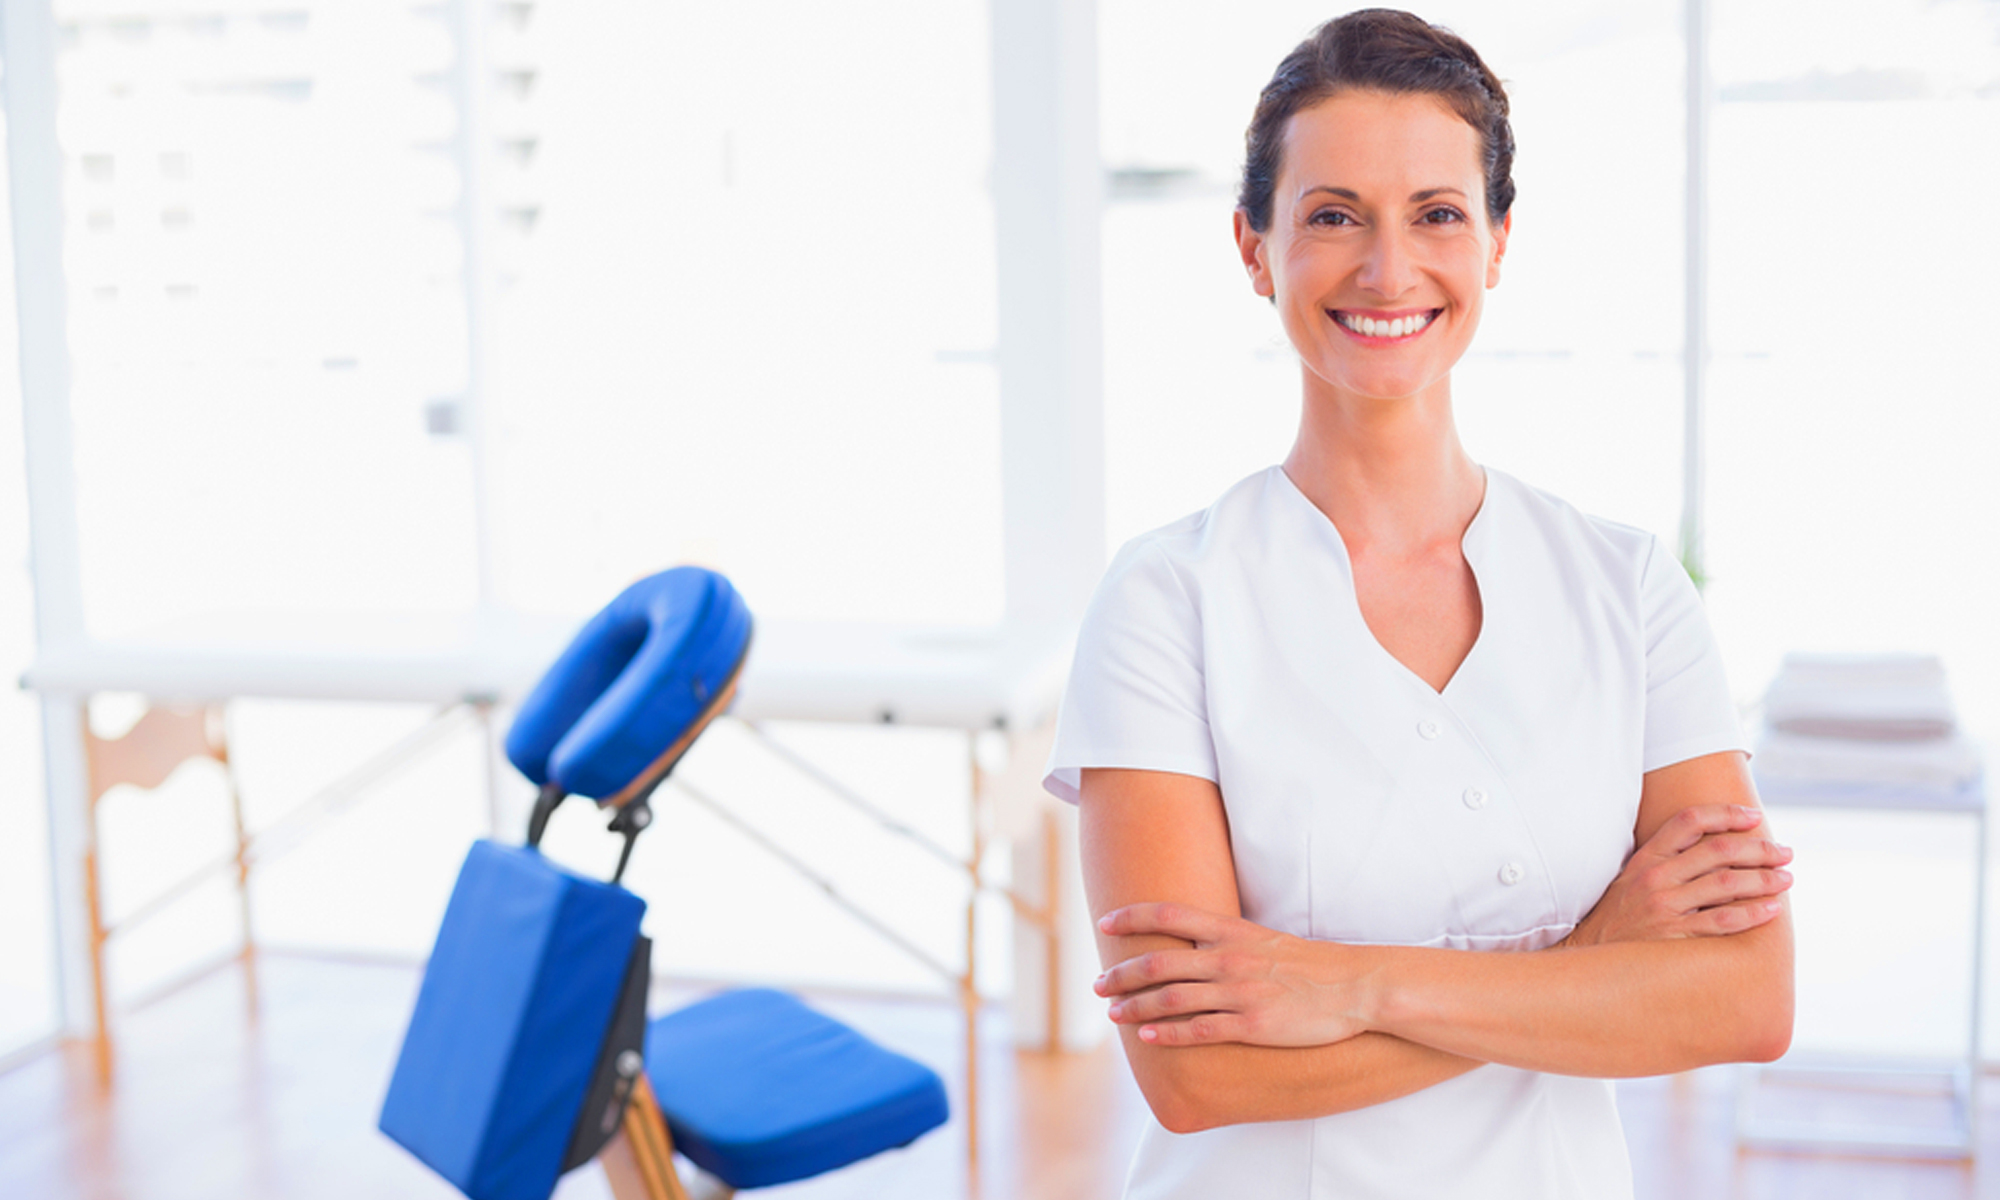 Massage therapist jobs in nursing homes